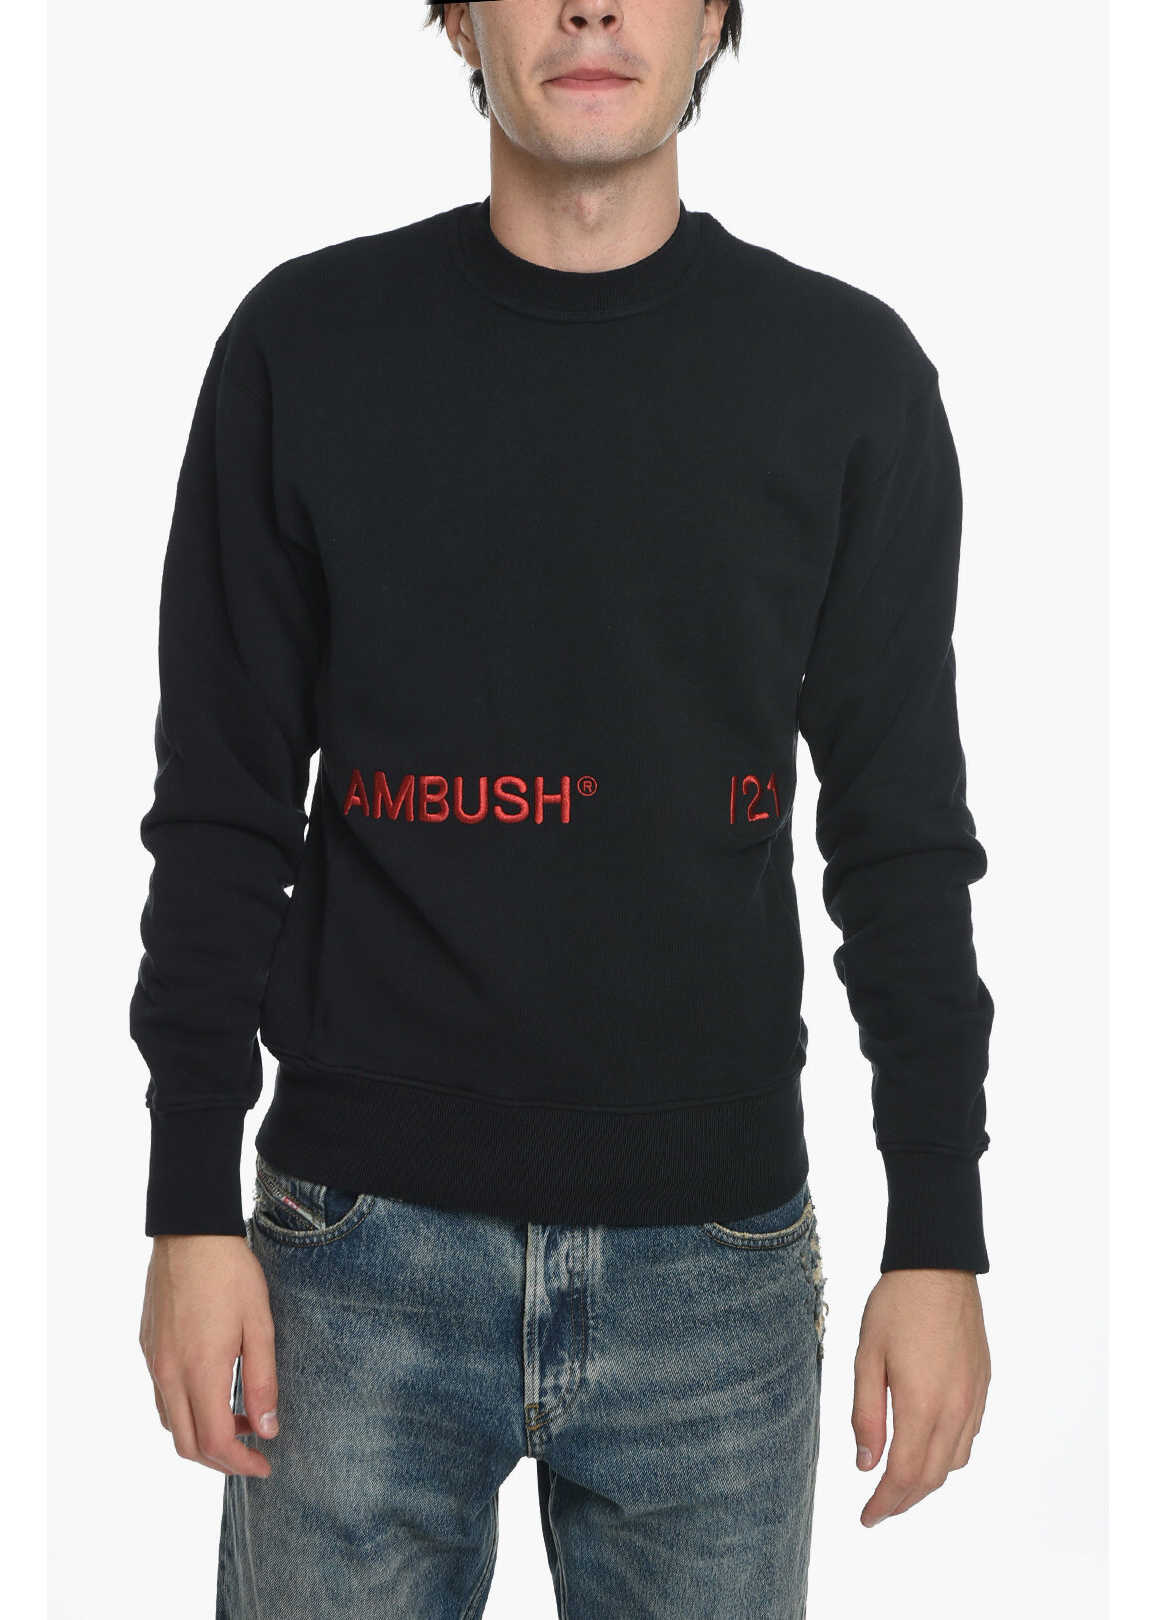 AMBUSH Crew Neck /21 Cotton Sweatshirt With Embroidered Logo Black